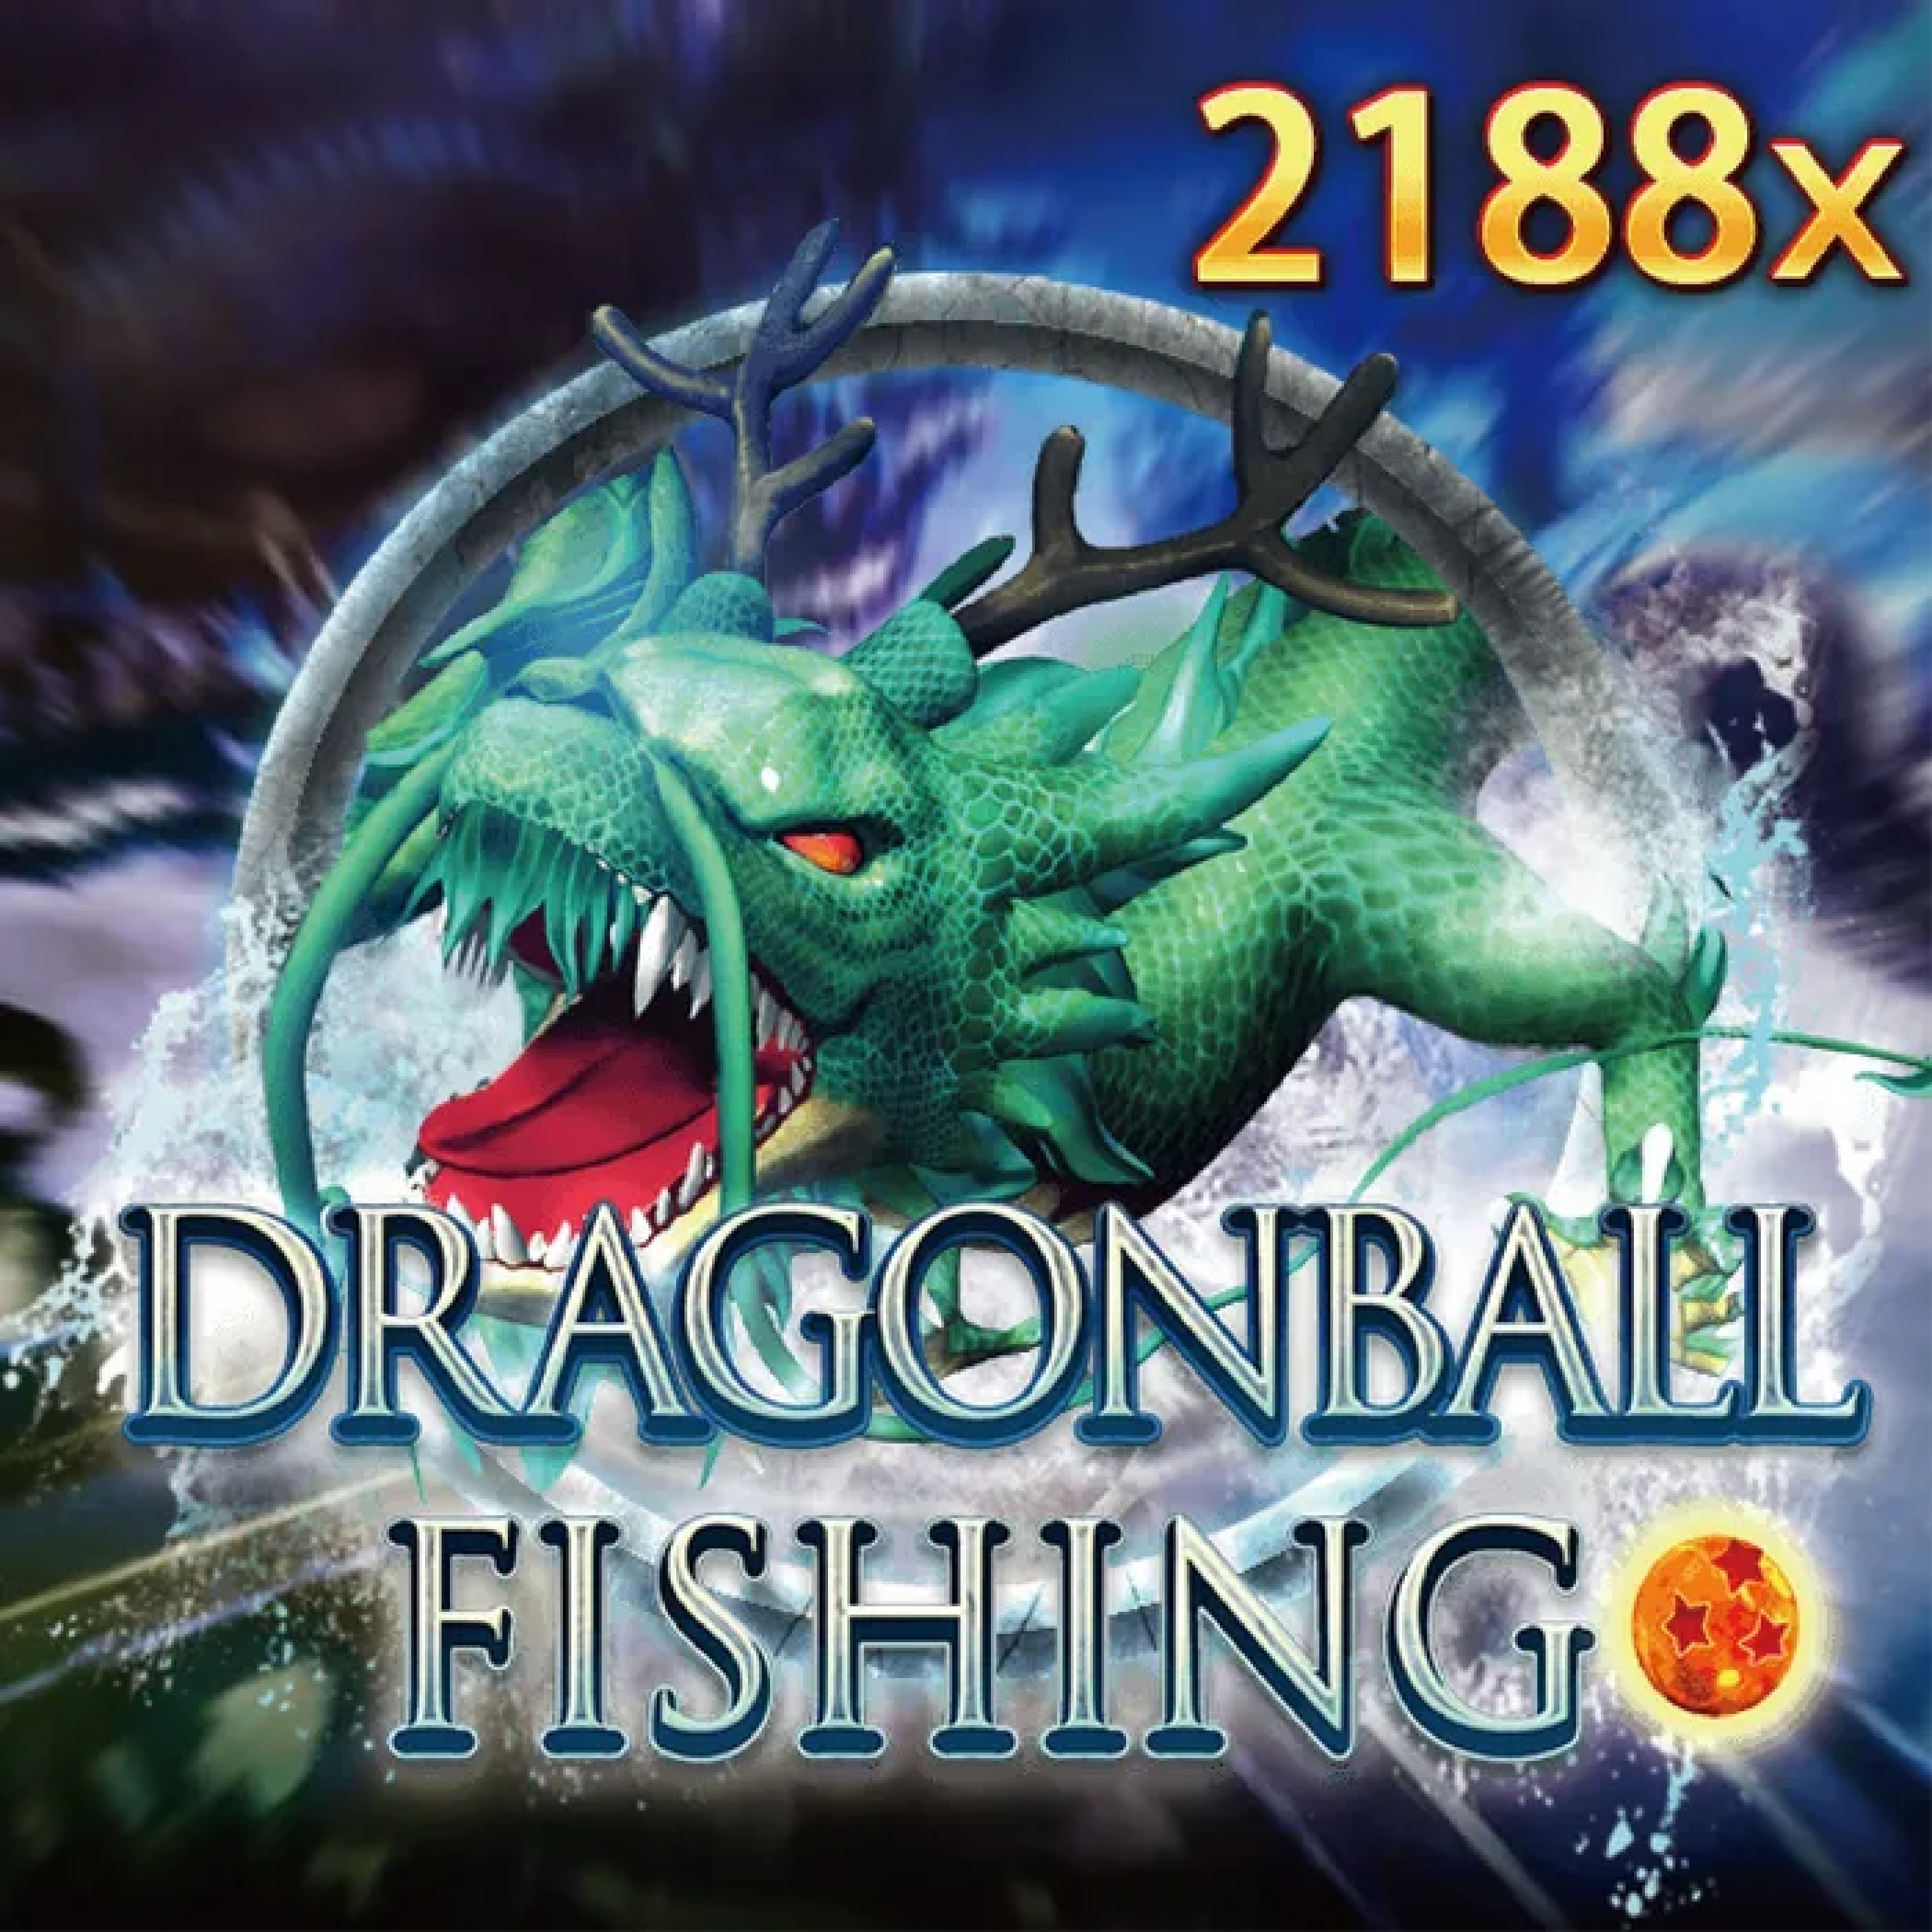 Dragonball Fishing demo